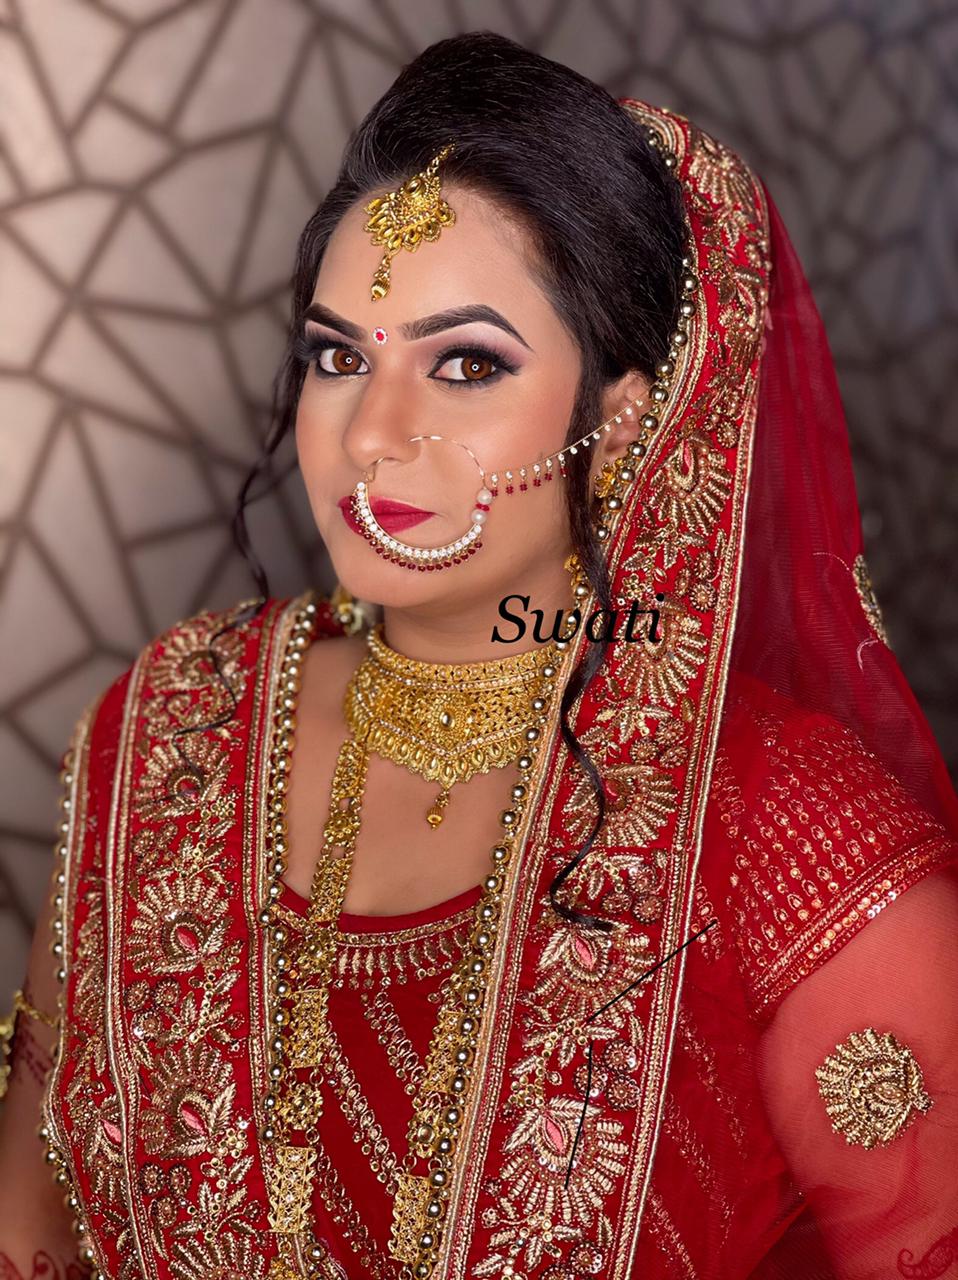 swati-makeovers-makeup-artist-lucknow